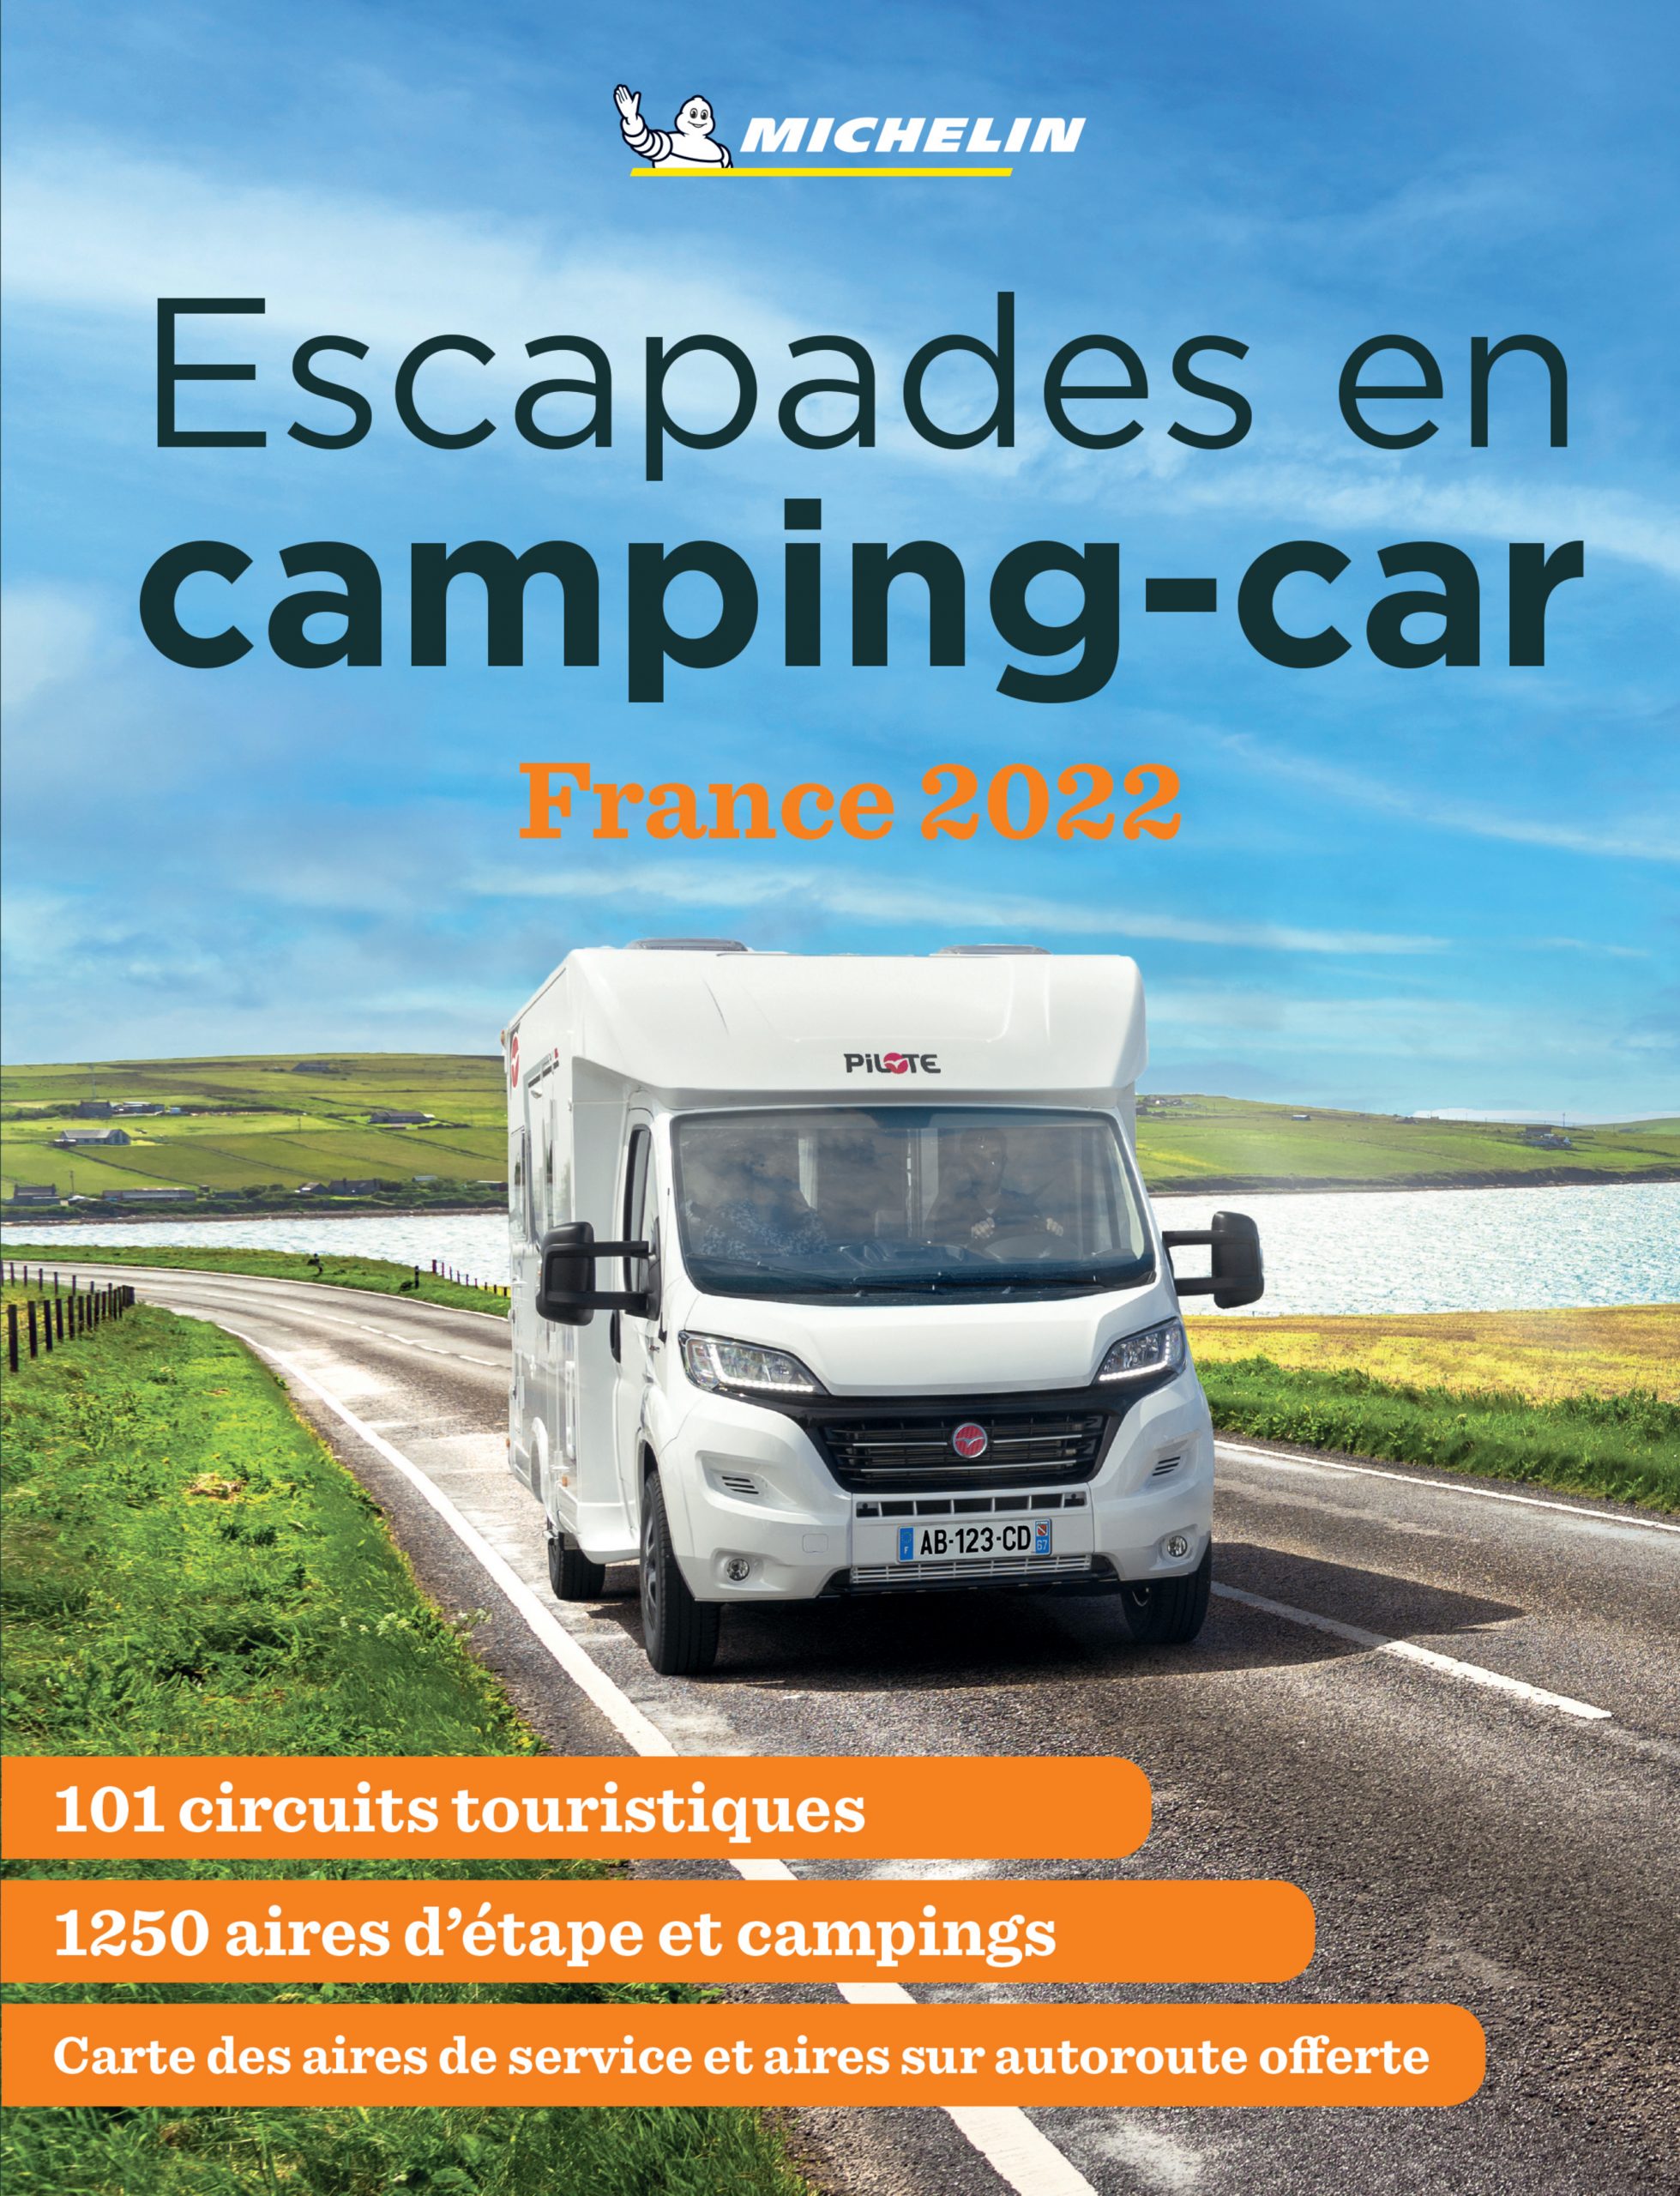 Escapades en Camping-car France 2021 